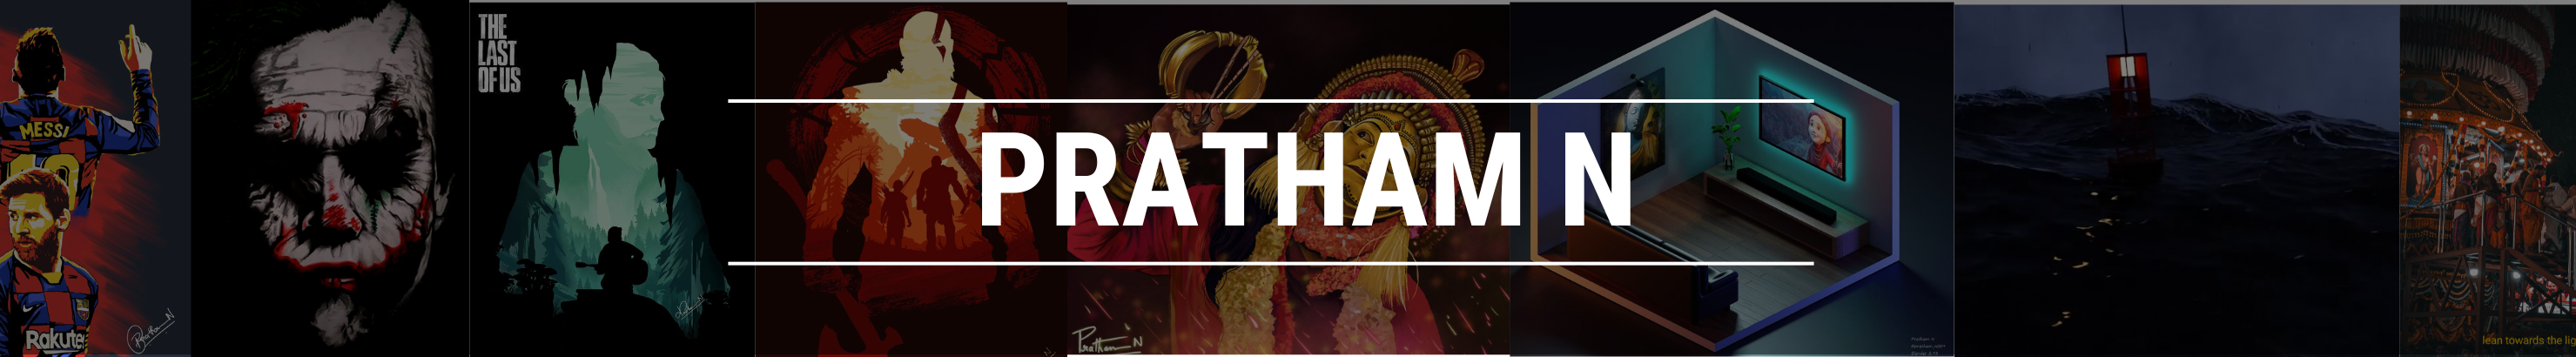 Pratham N's profile banner